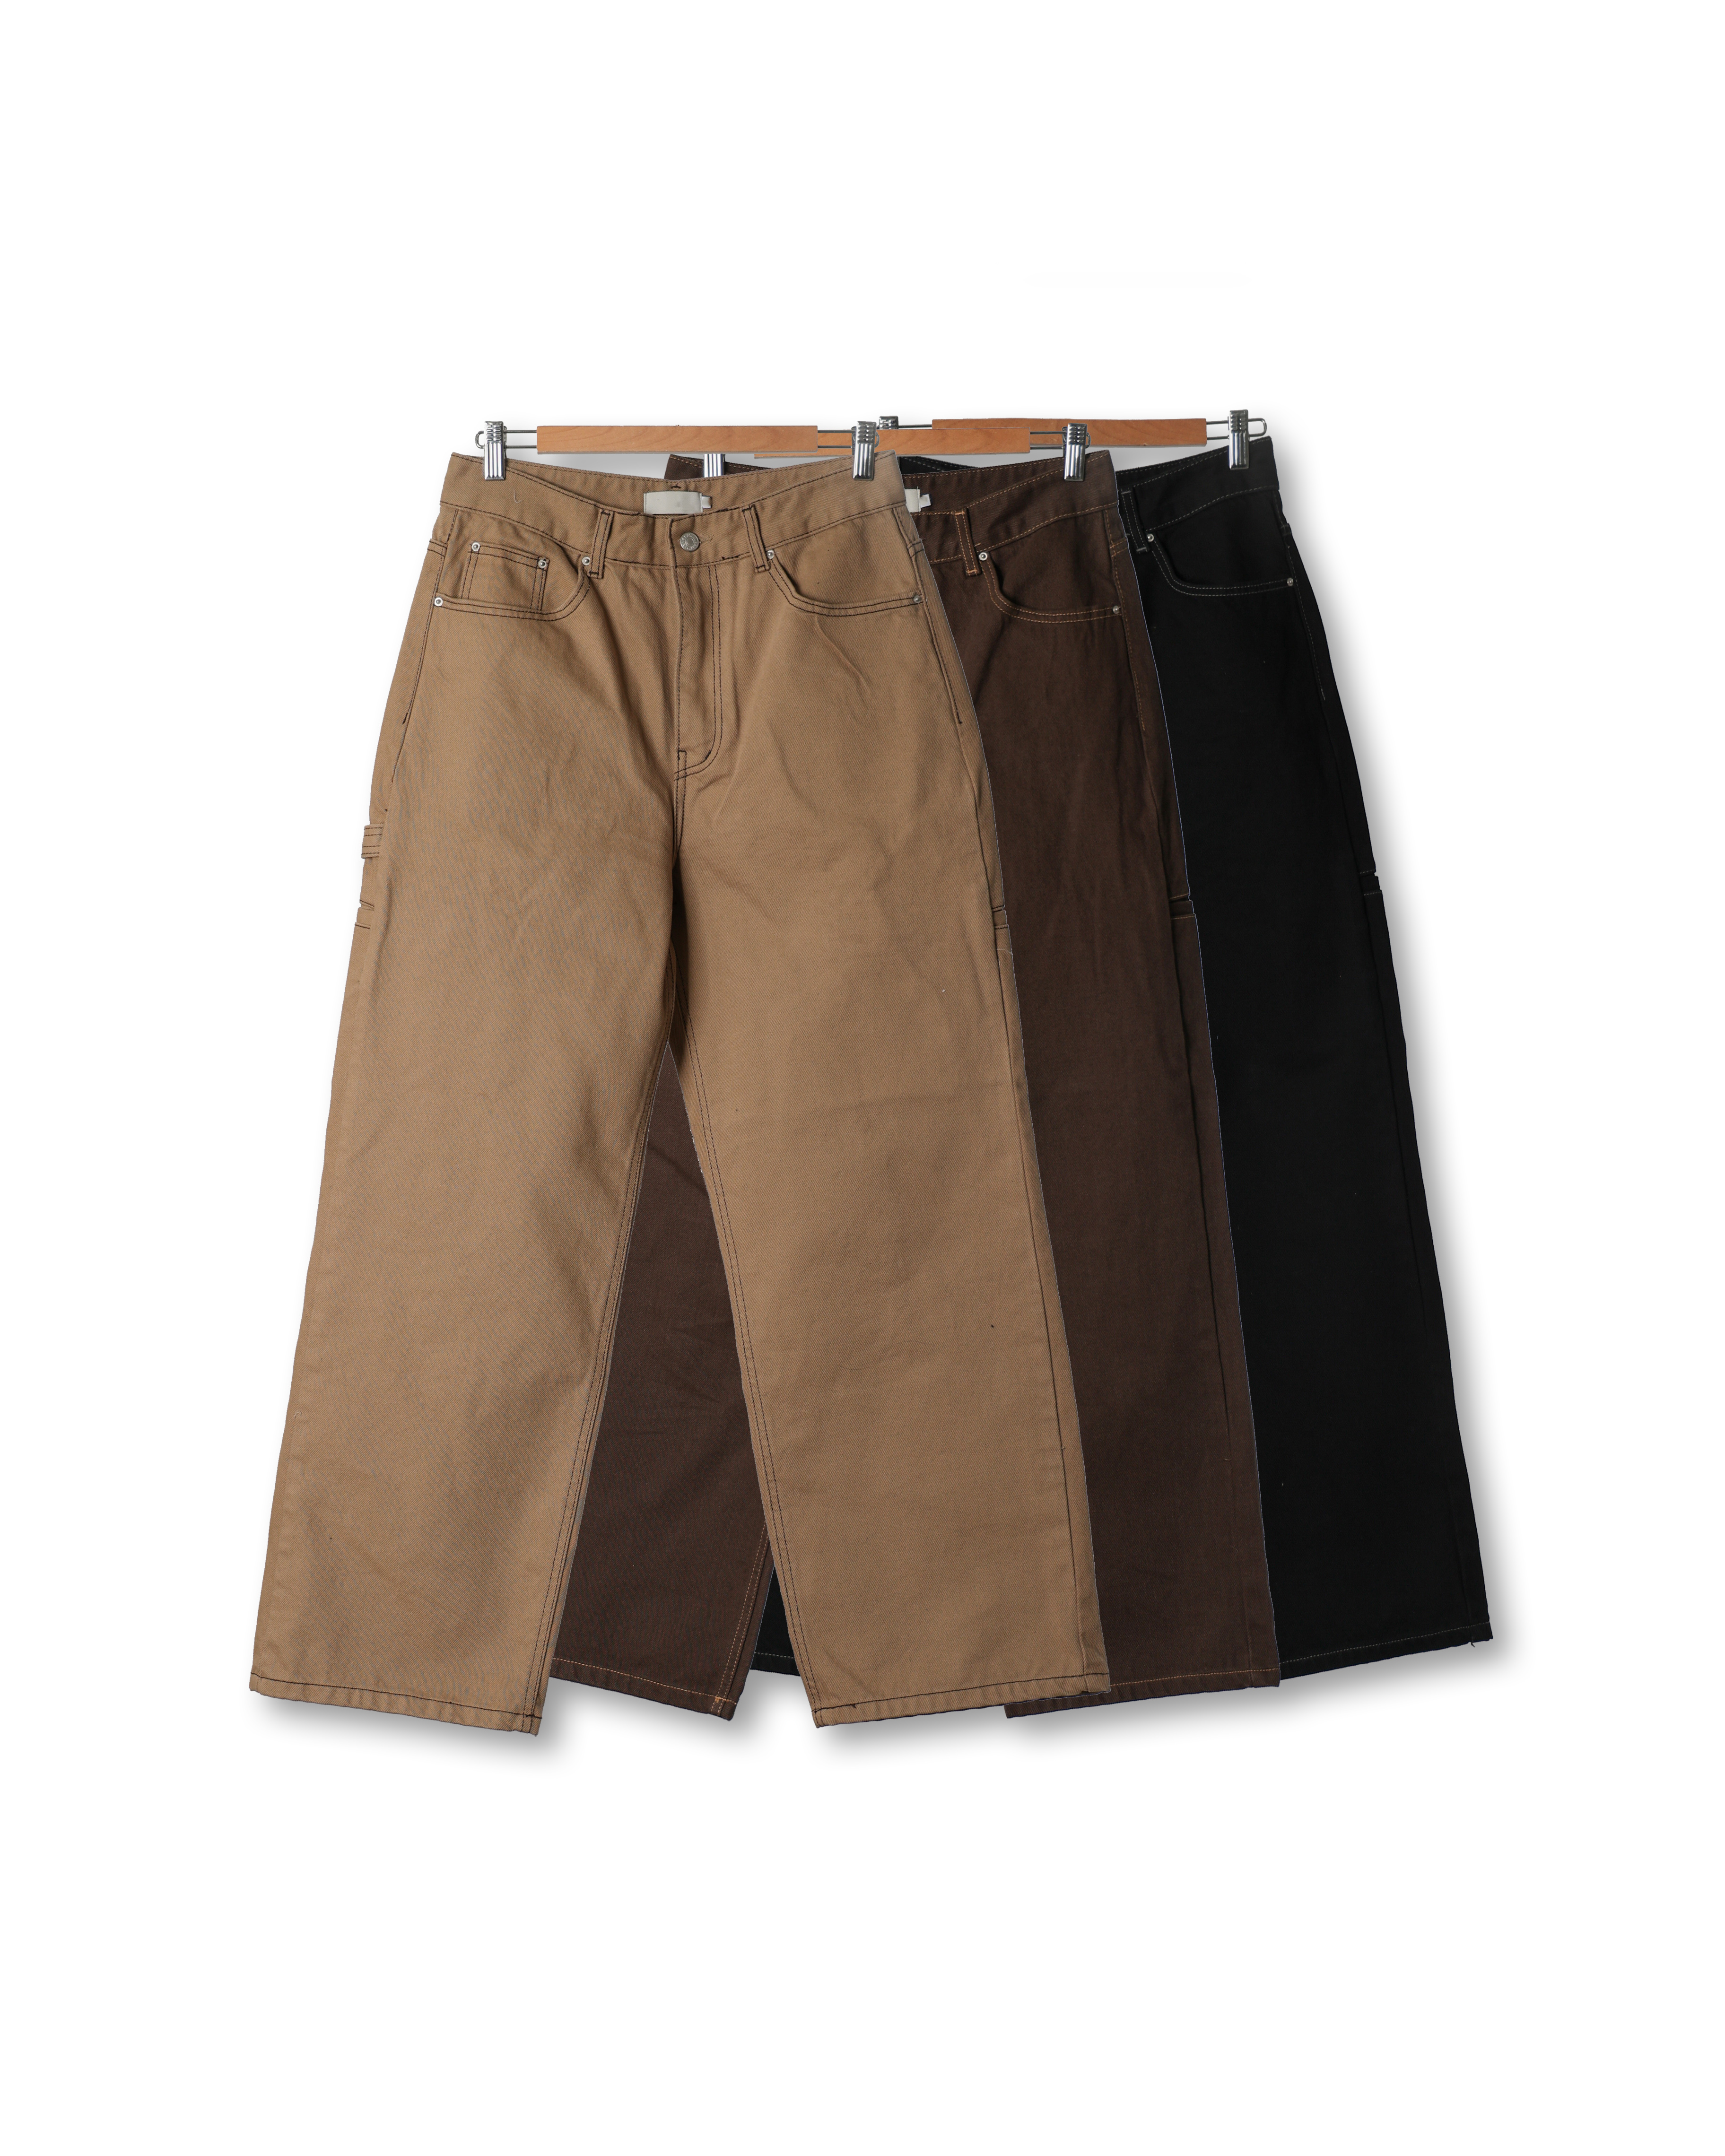 NSWR Rough Work Carpenter Pants (Black/Brown/Beige)